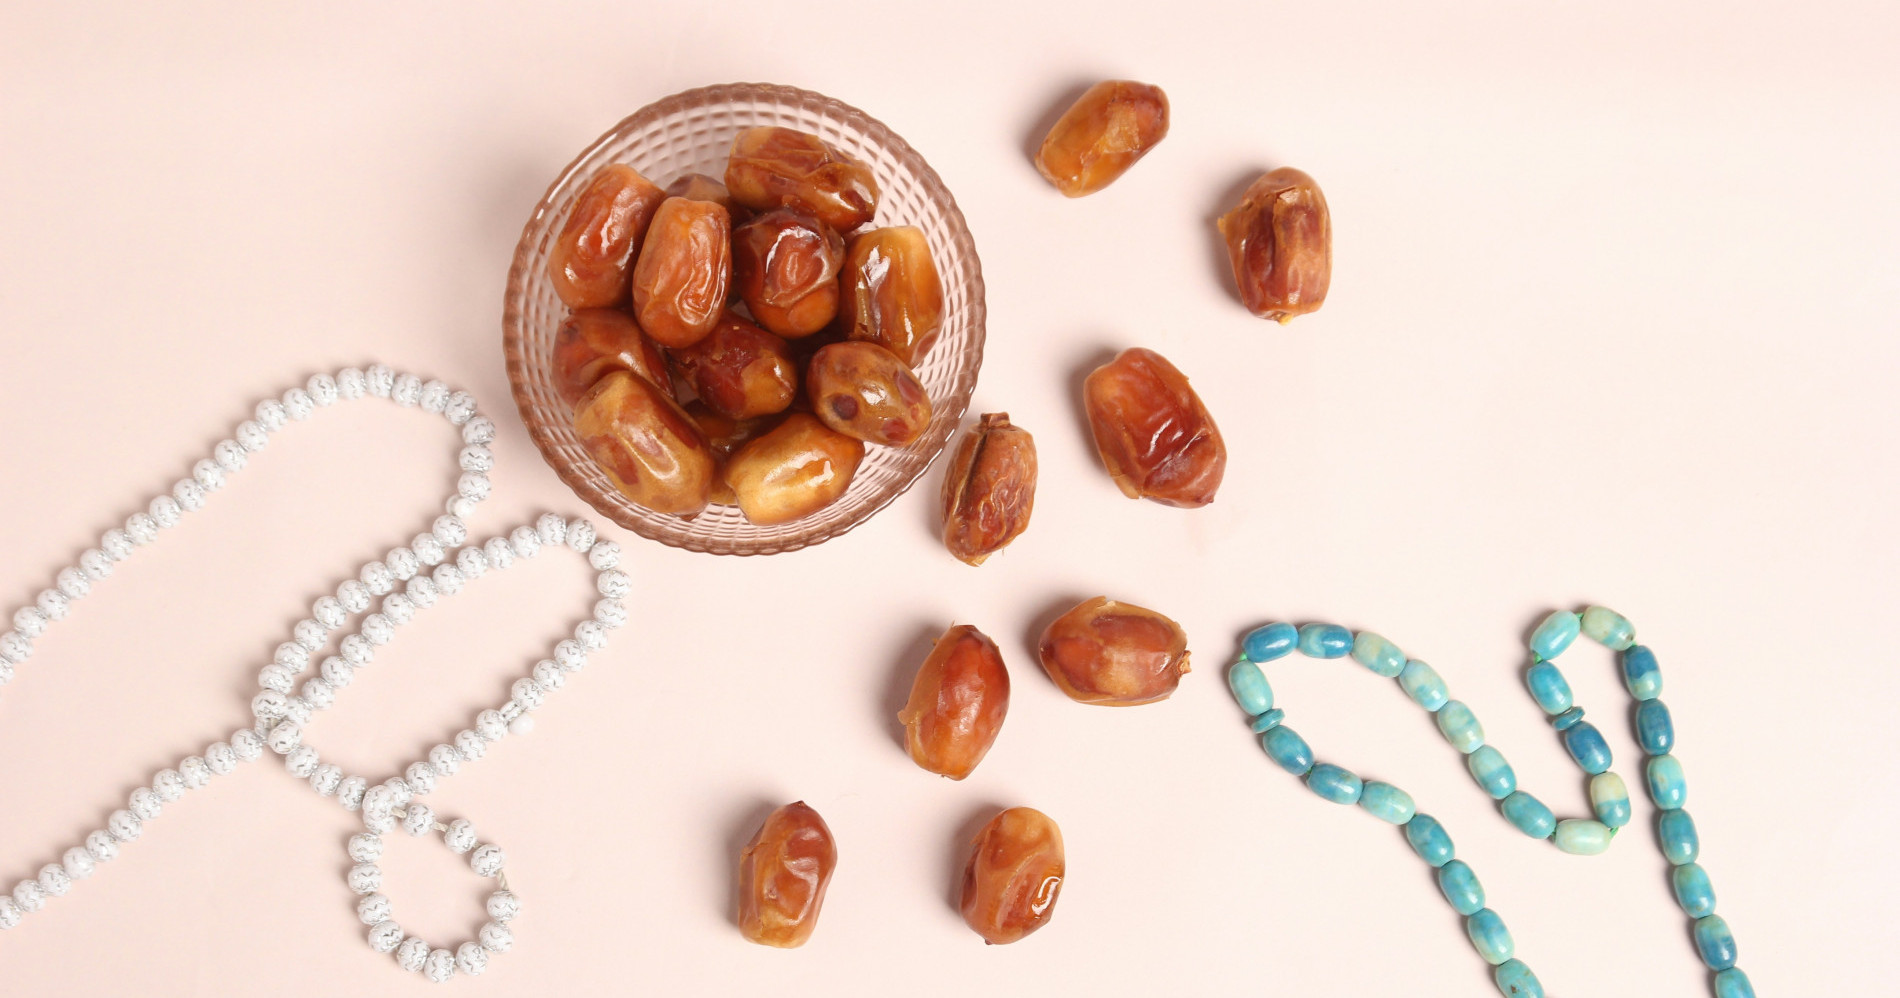 Beberapa benda khas saat memasuki bulan ramadan (Sumber : unsplash.com by Rauf Alvi)